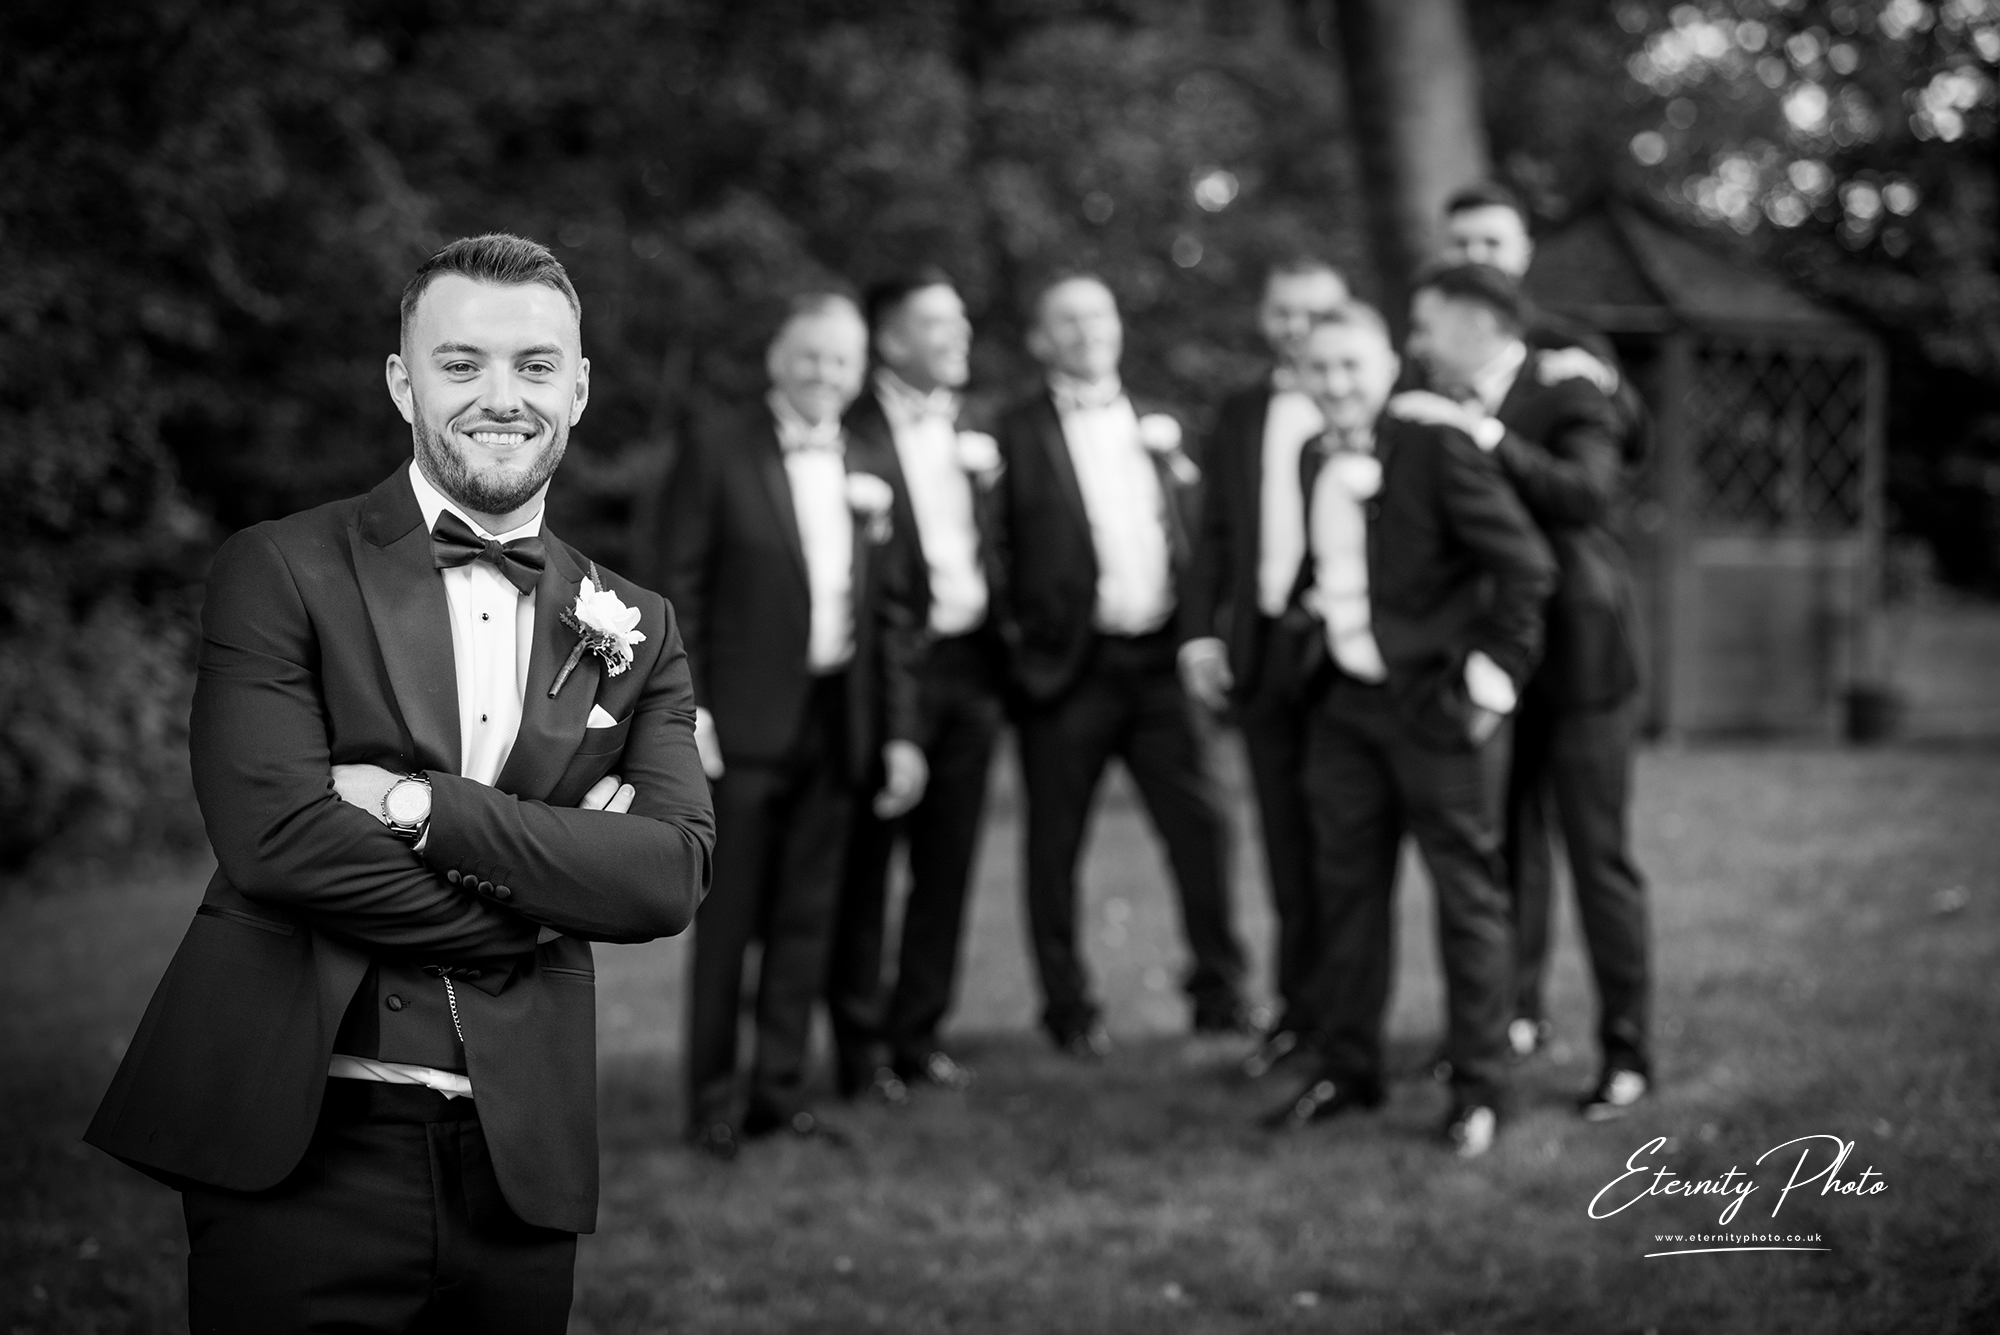 Groom with groomsmen in formal black-tie attire.